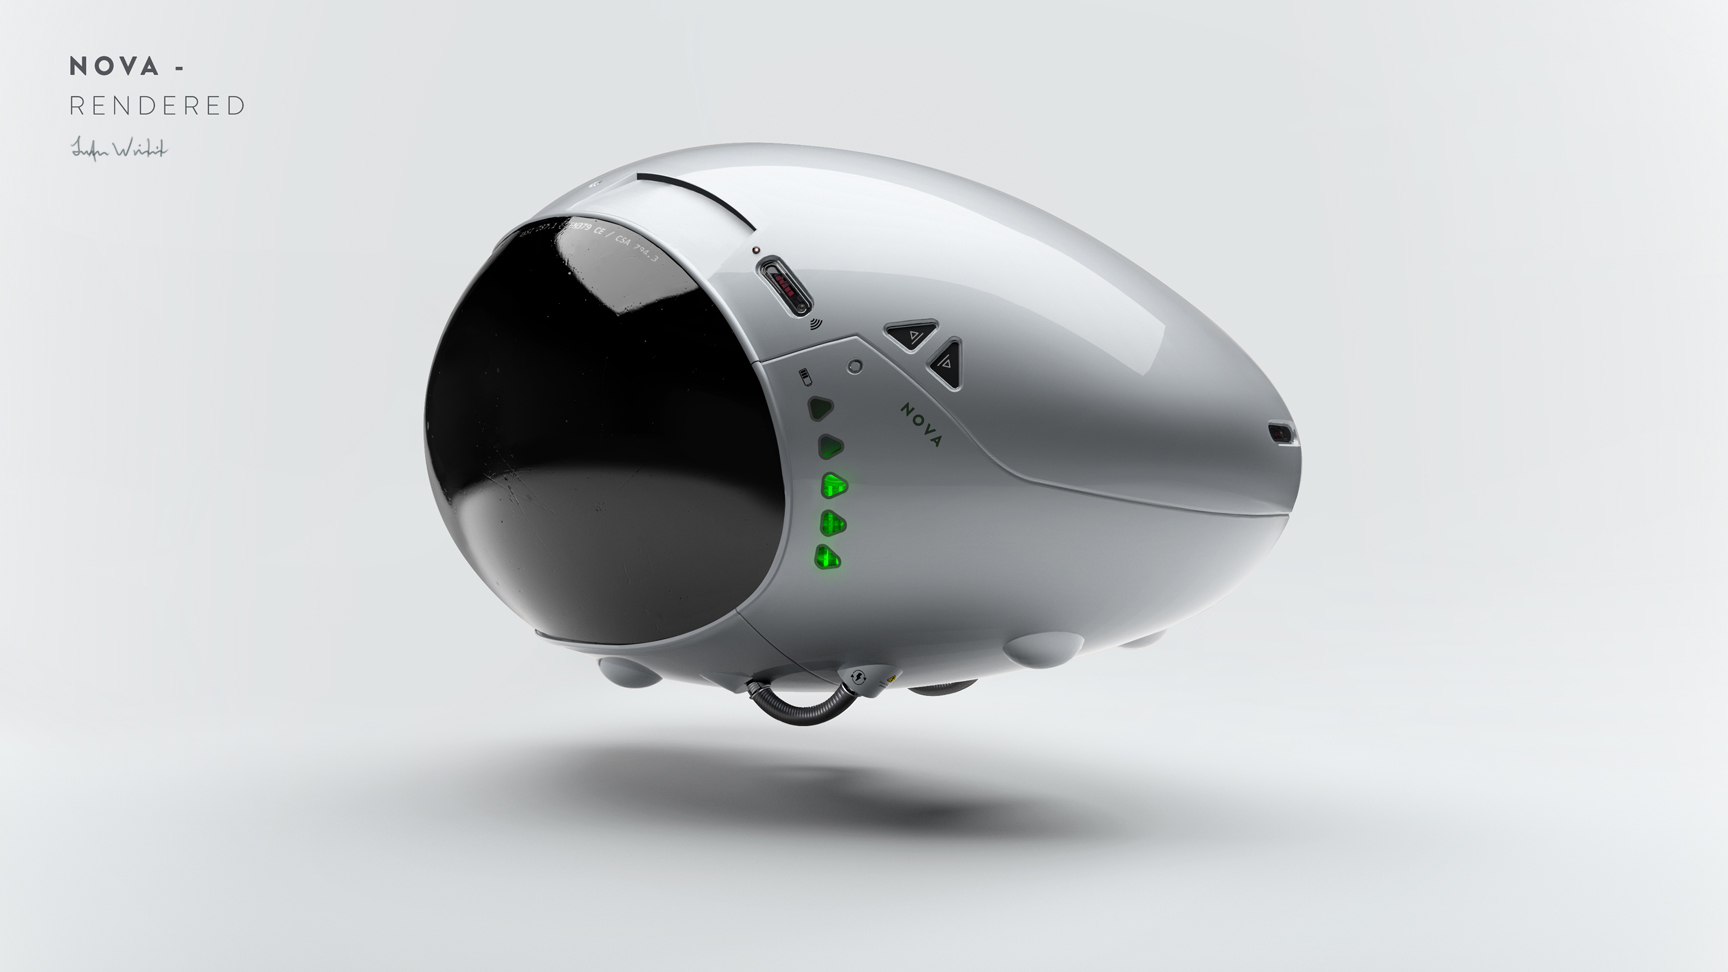 3D Rendered image of the NOVA vehicle concept - Perspective view - Illustrator and designer: Johan Wibrink